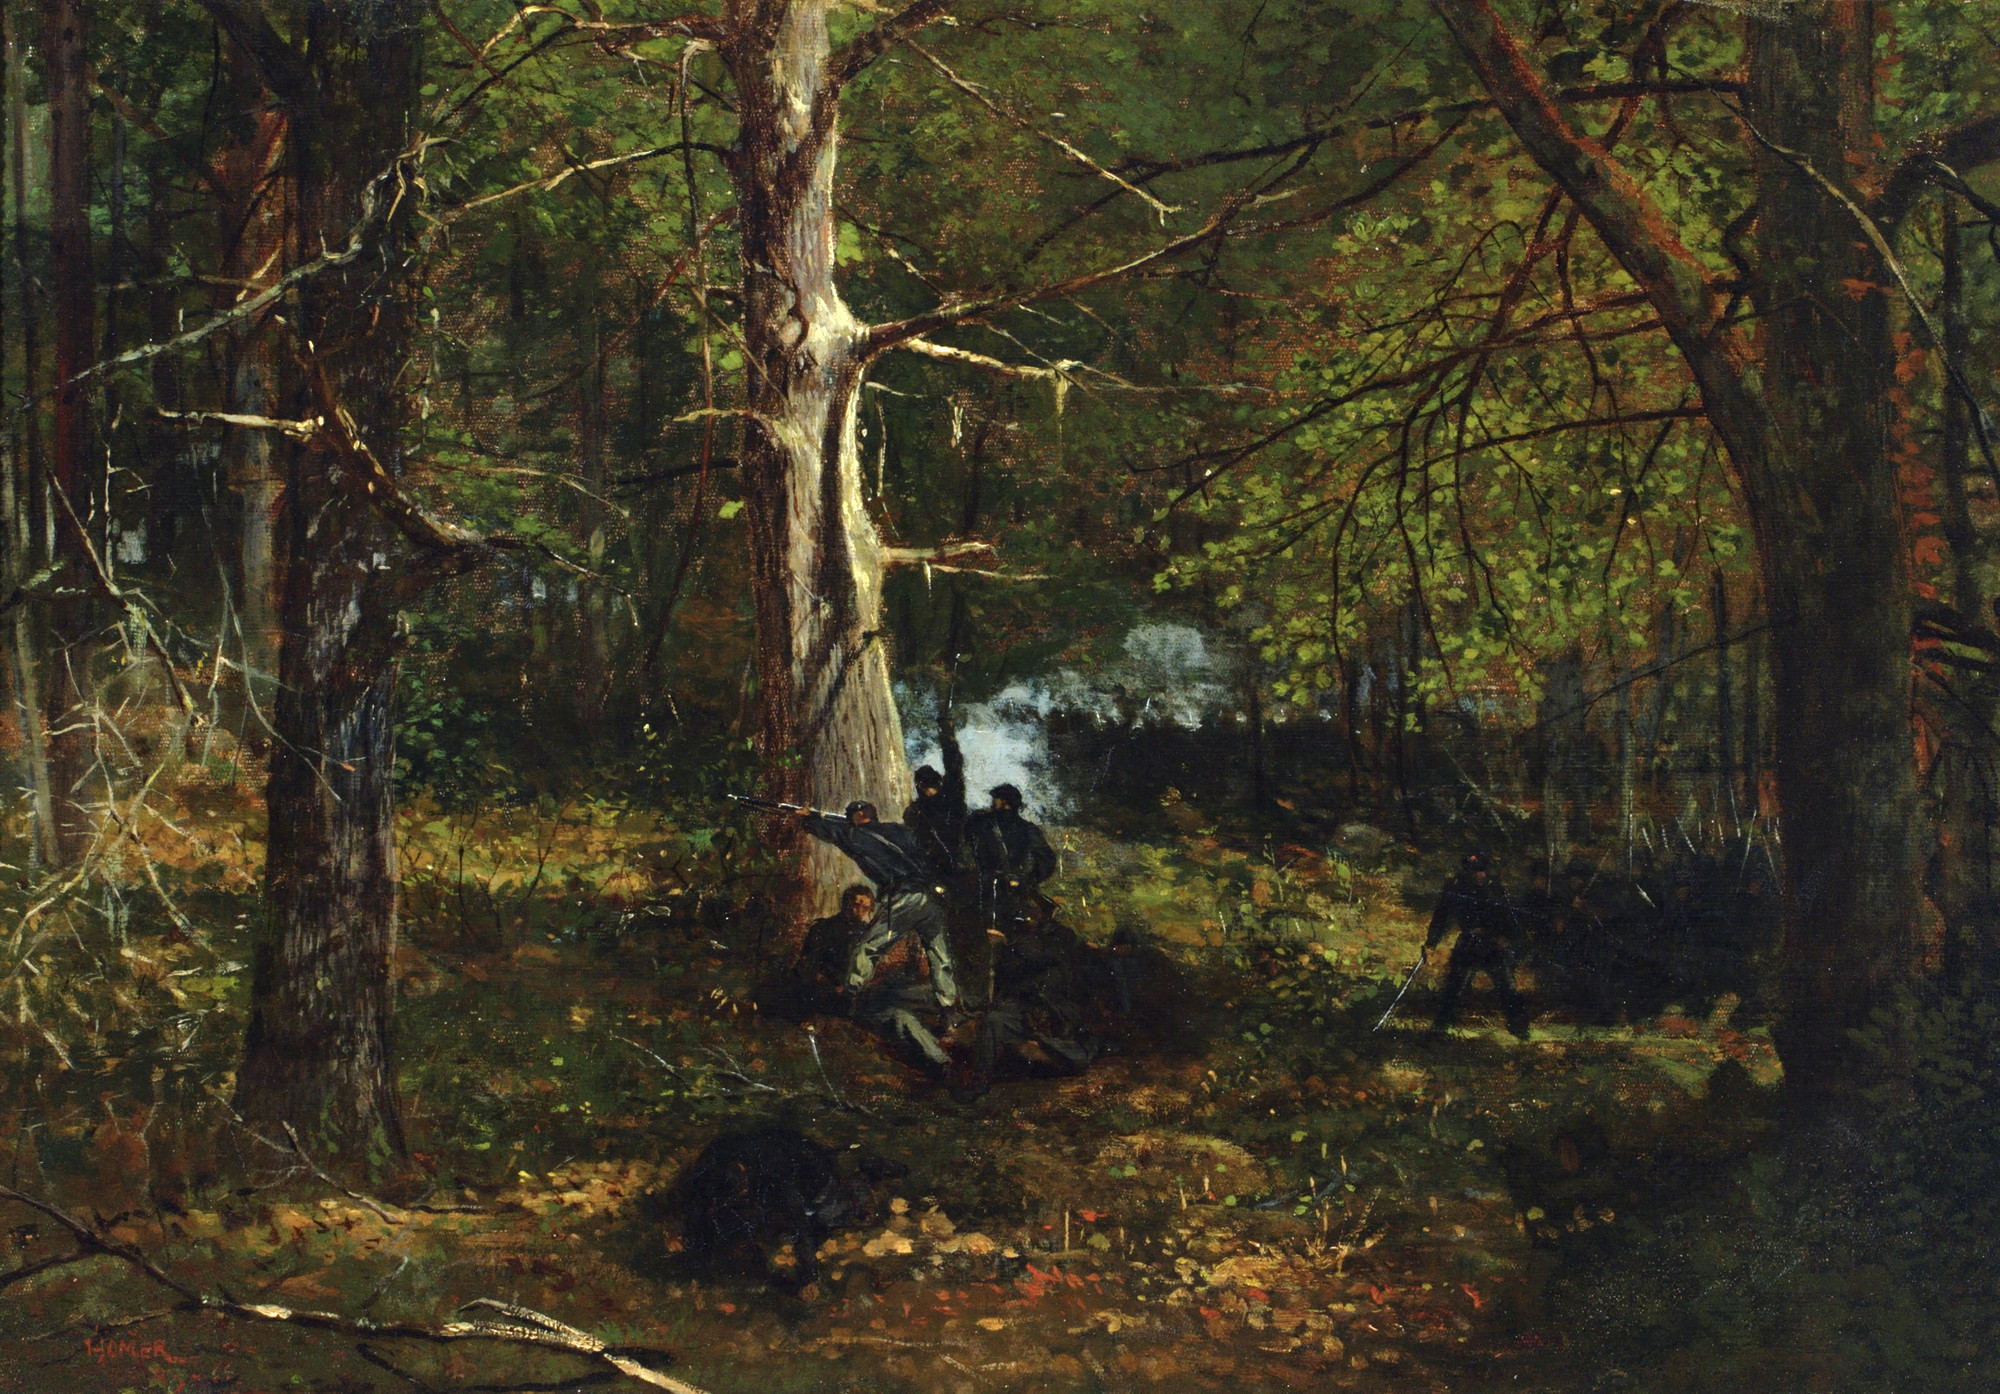 Skirmish in the Wilderness (1864)( Перестрелка в чаще леса )